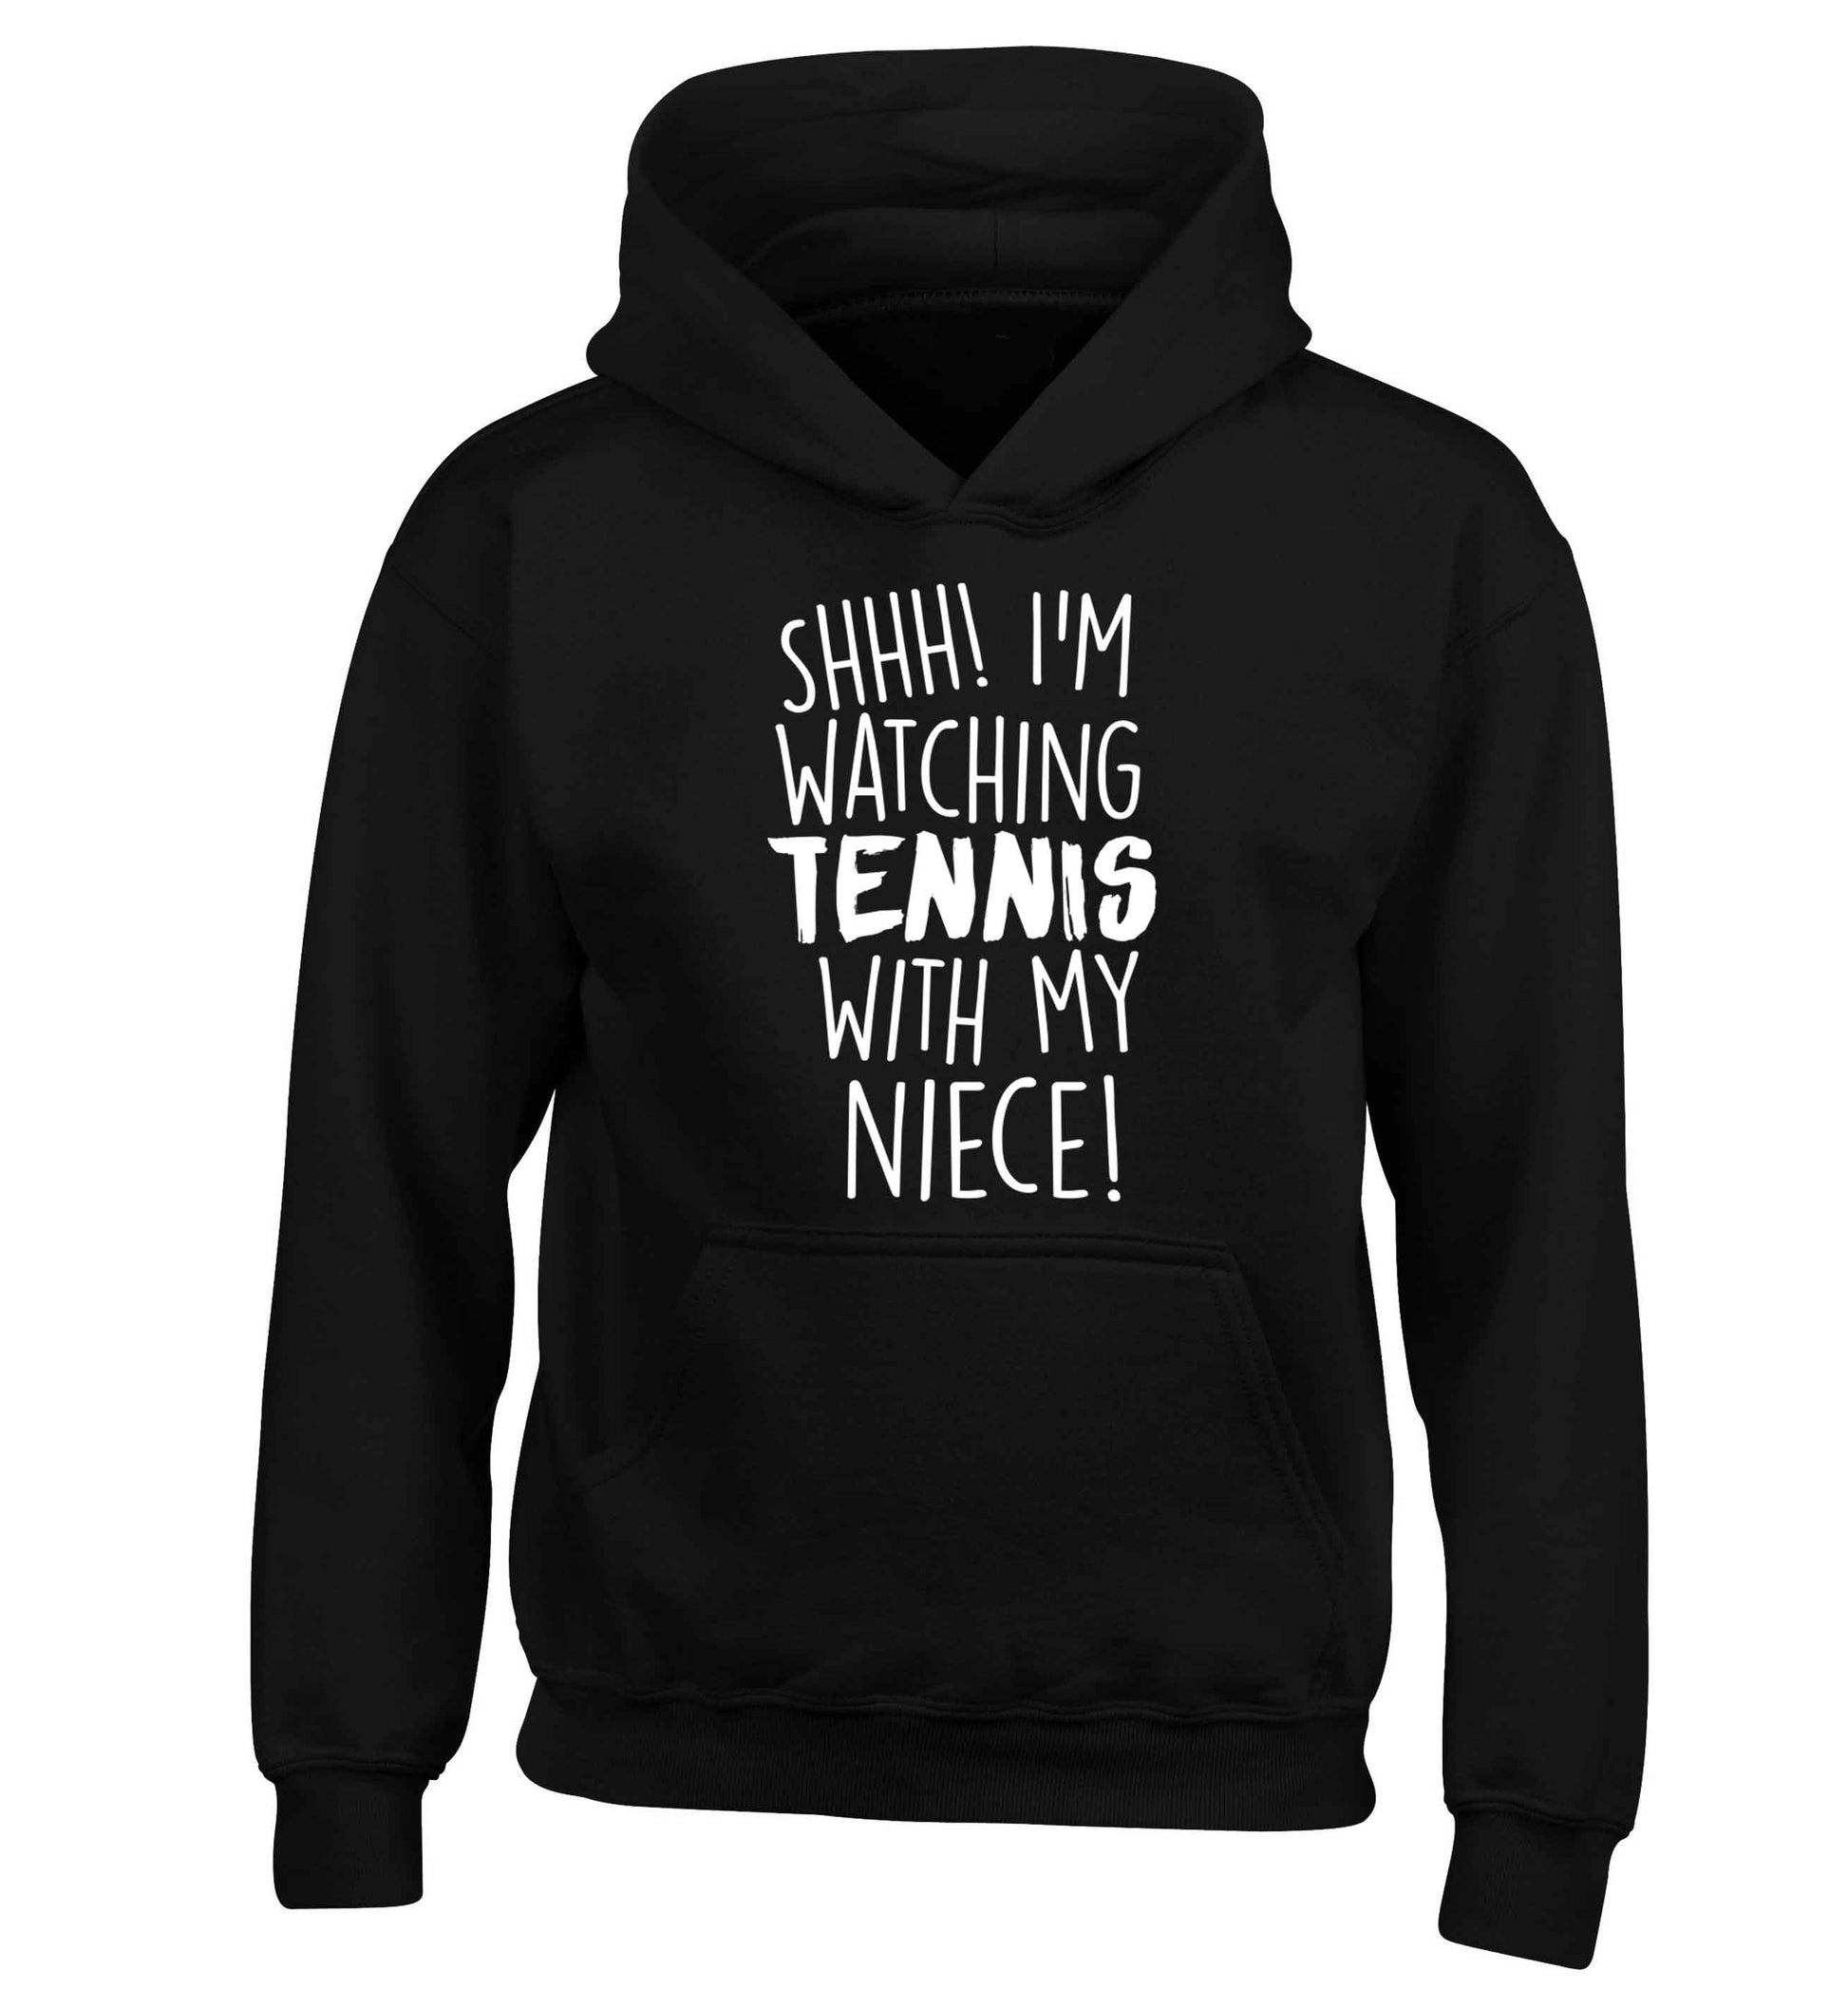 Shh! I'm watching tennis with my niece! children's black hoodie 12-13 Years